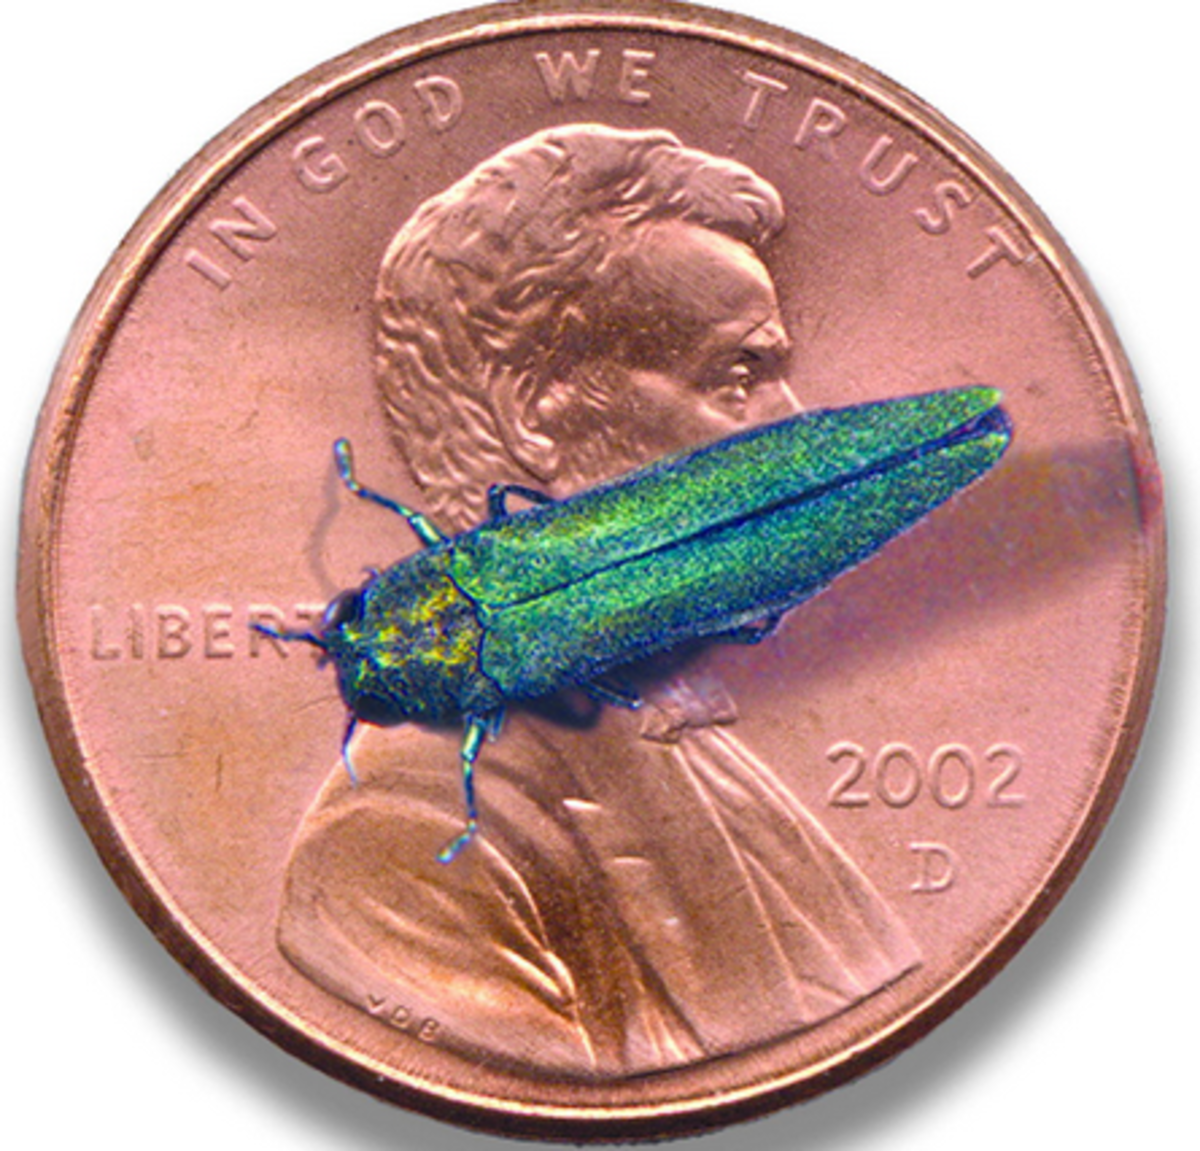 beetle-identification